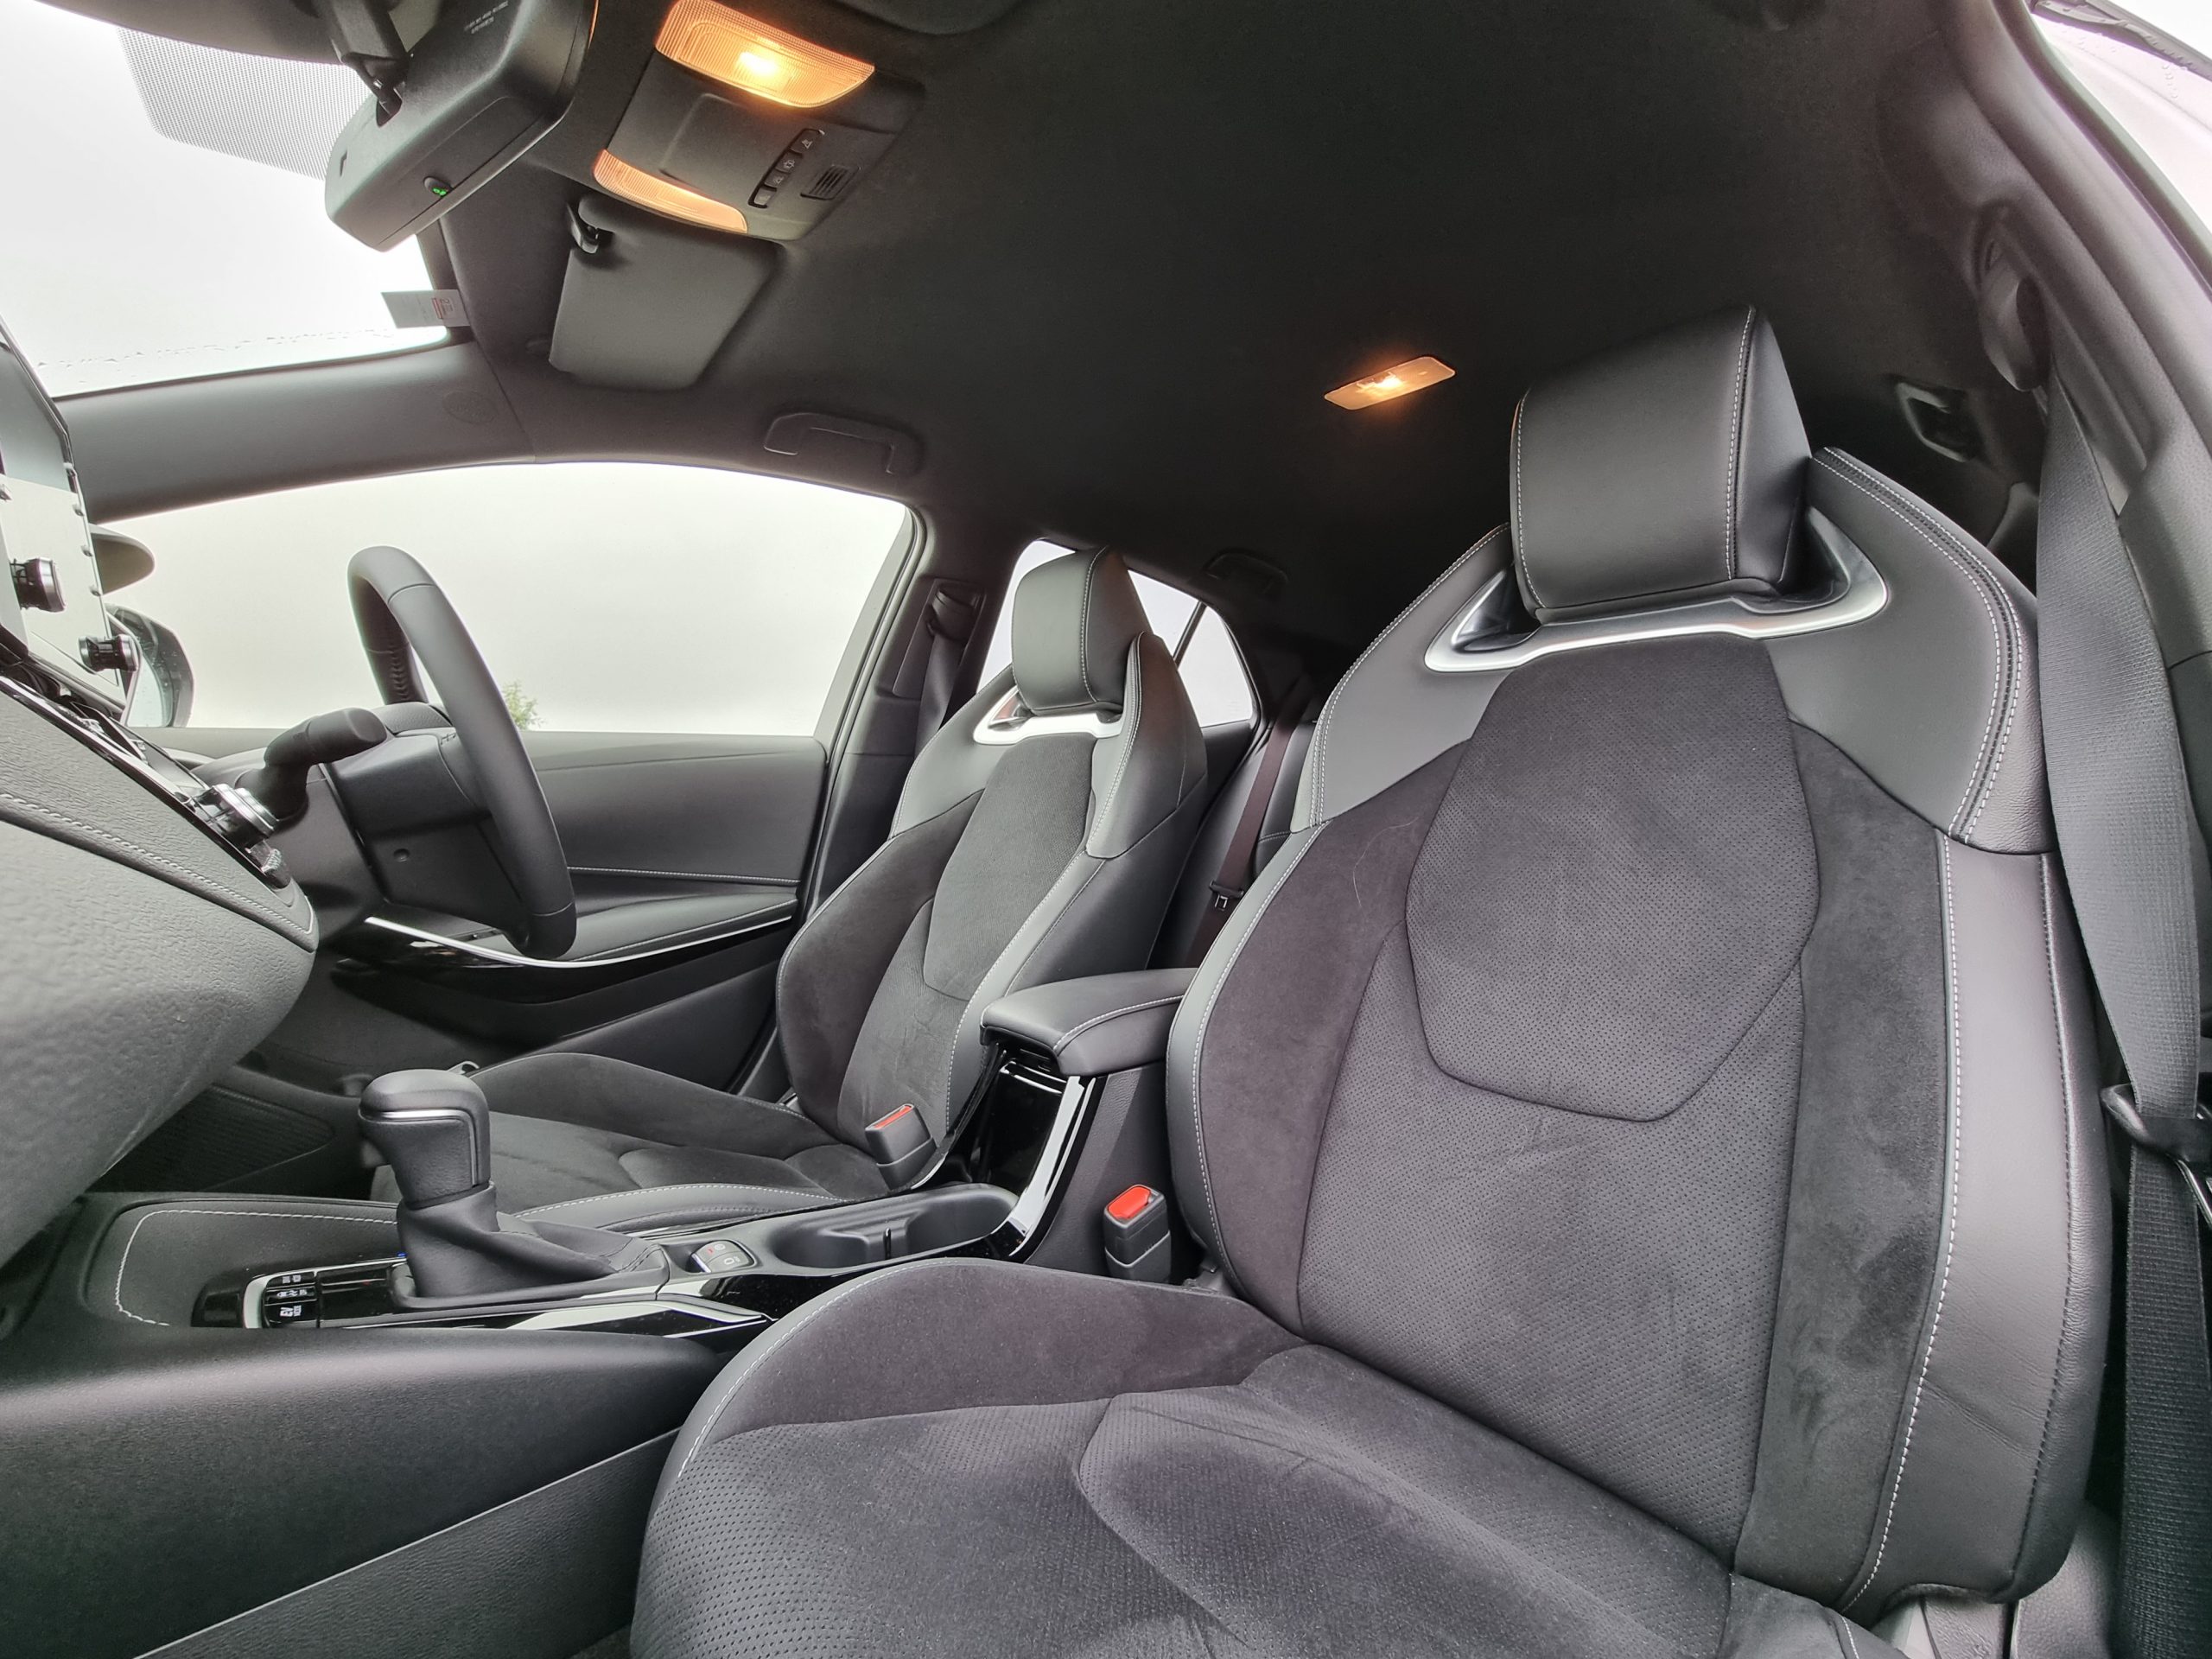 2022 Toyota Corolla interior